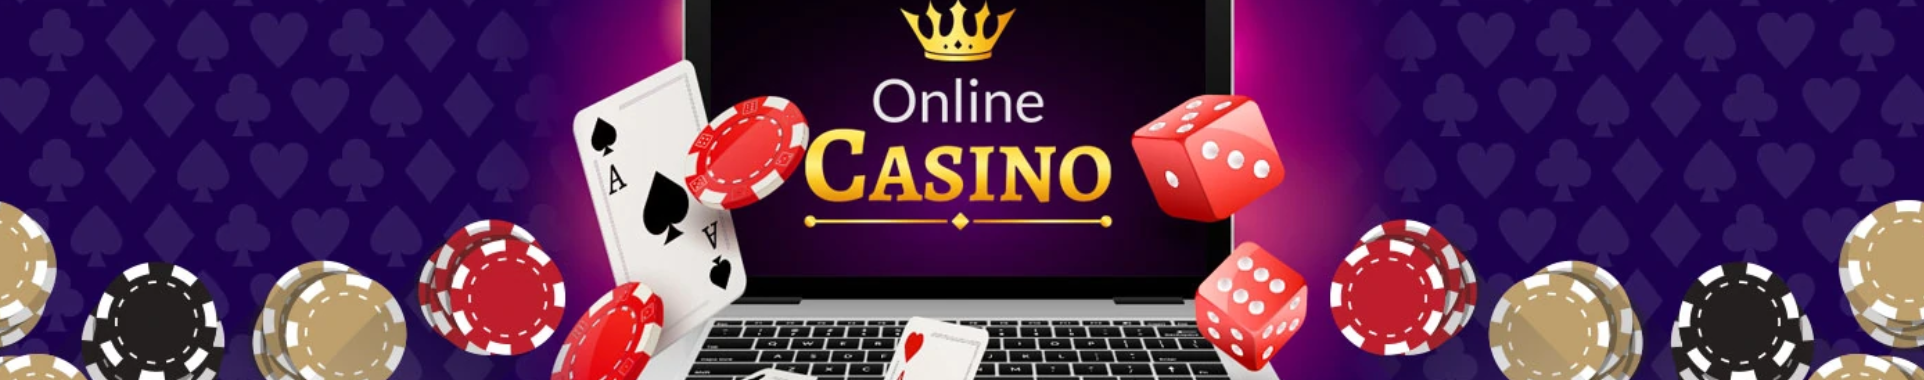 revue casino en ligne